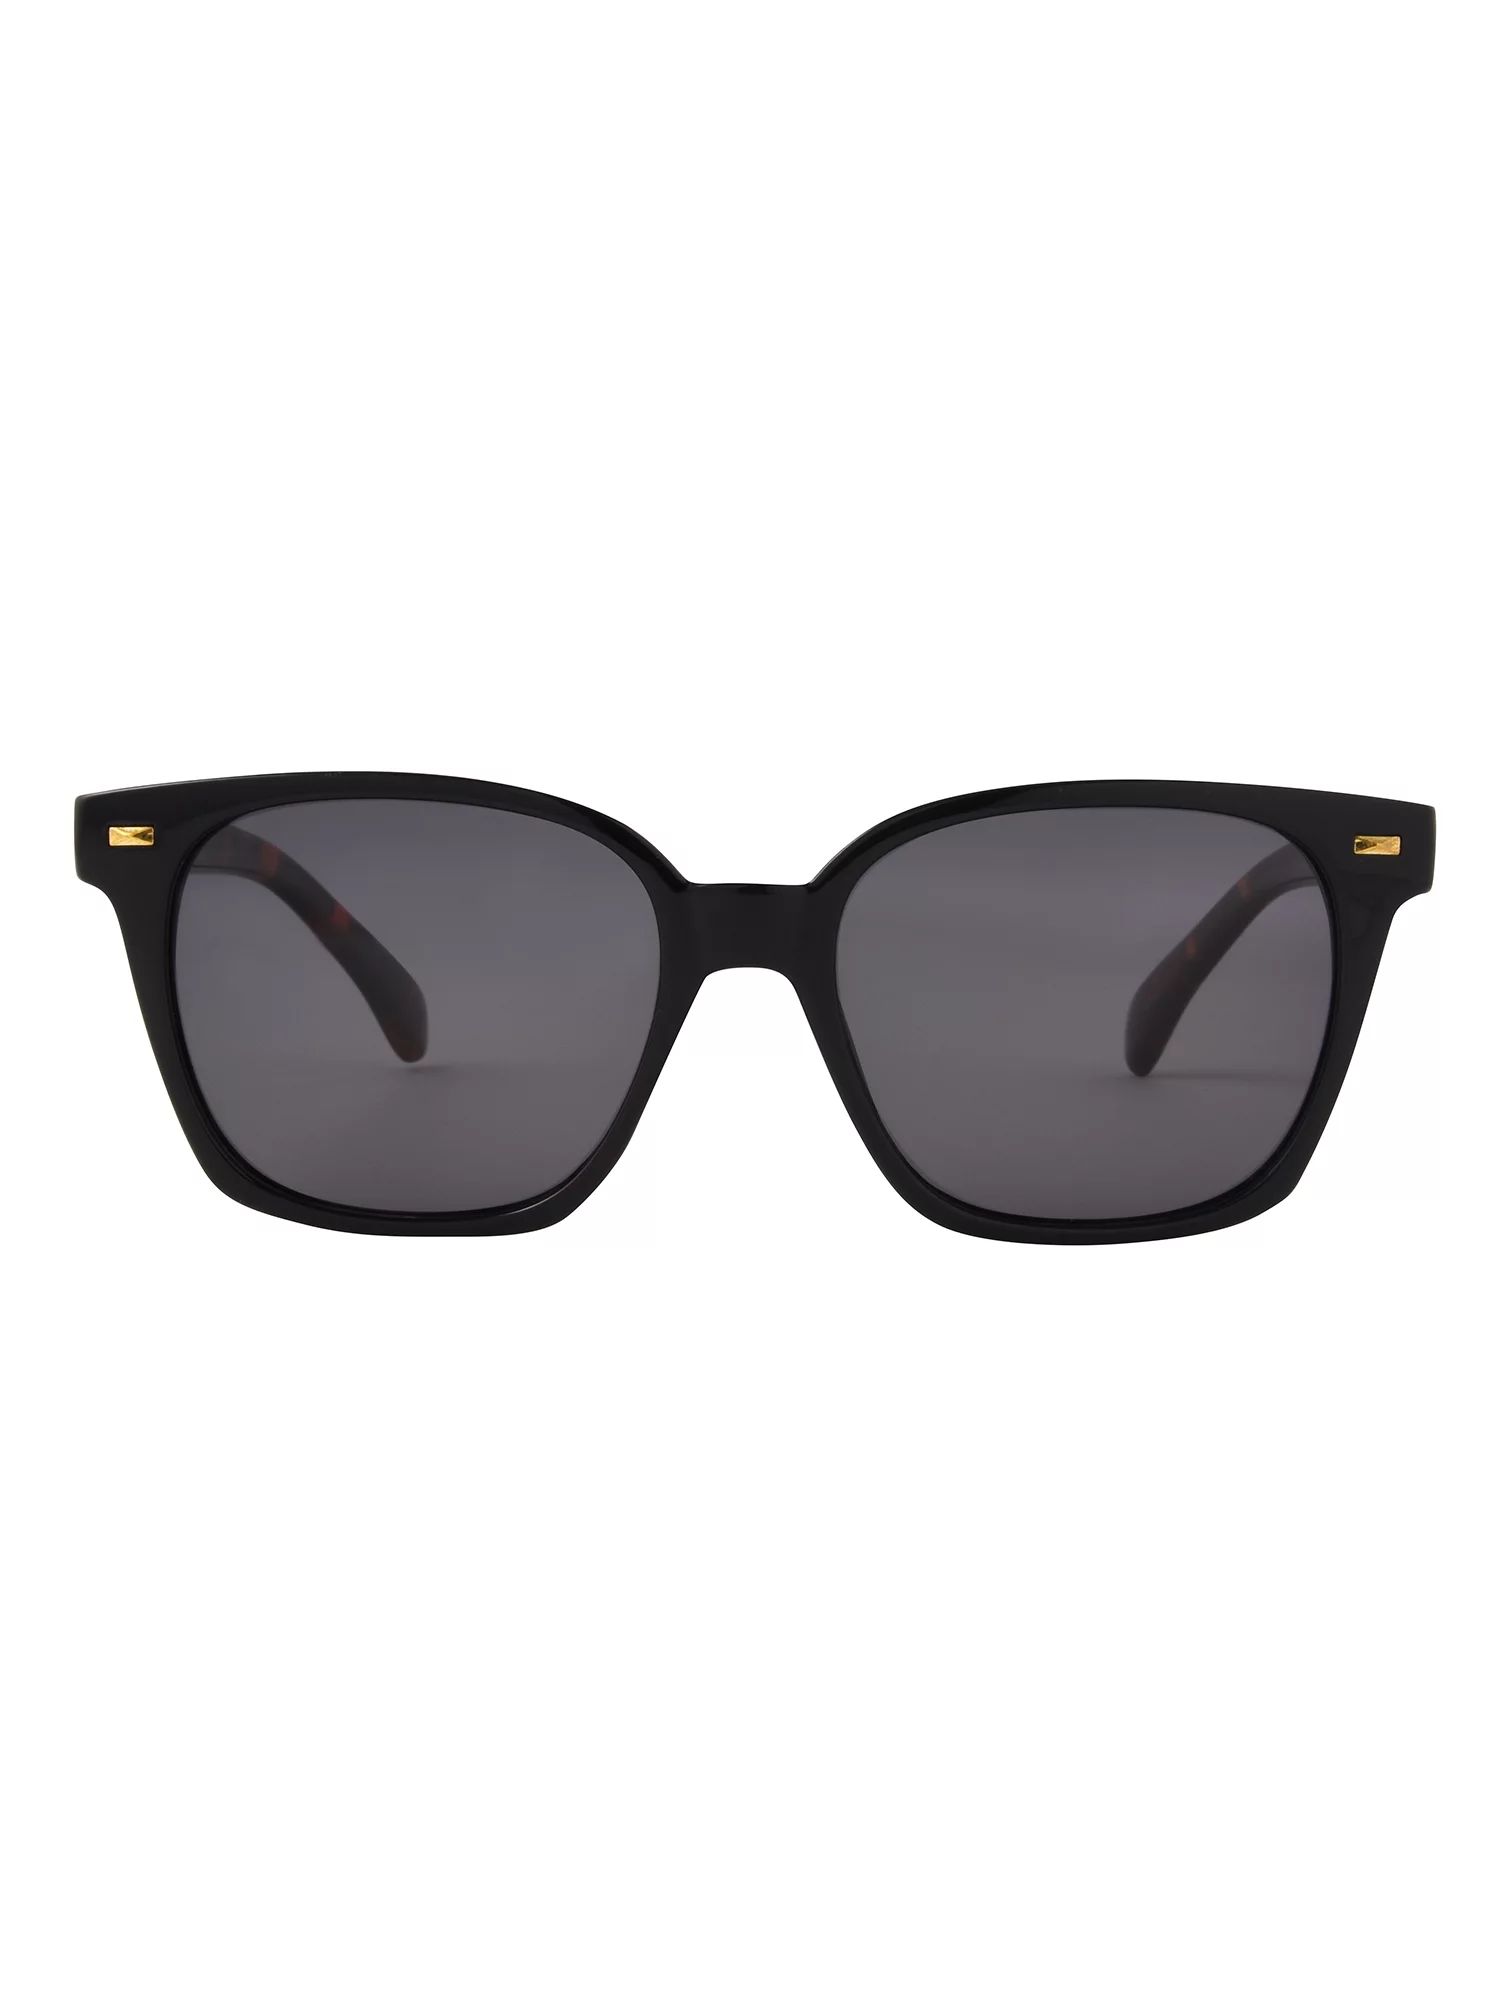 Foster Grant Women's Way-Shaped Fashion Sunglasses Black | Walmart (US)